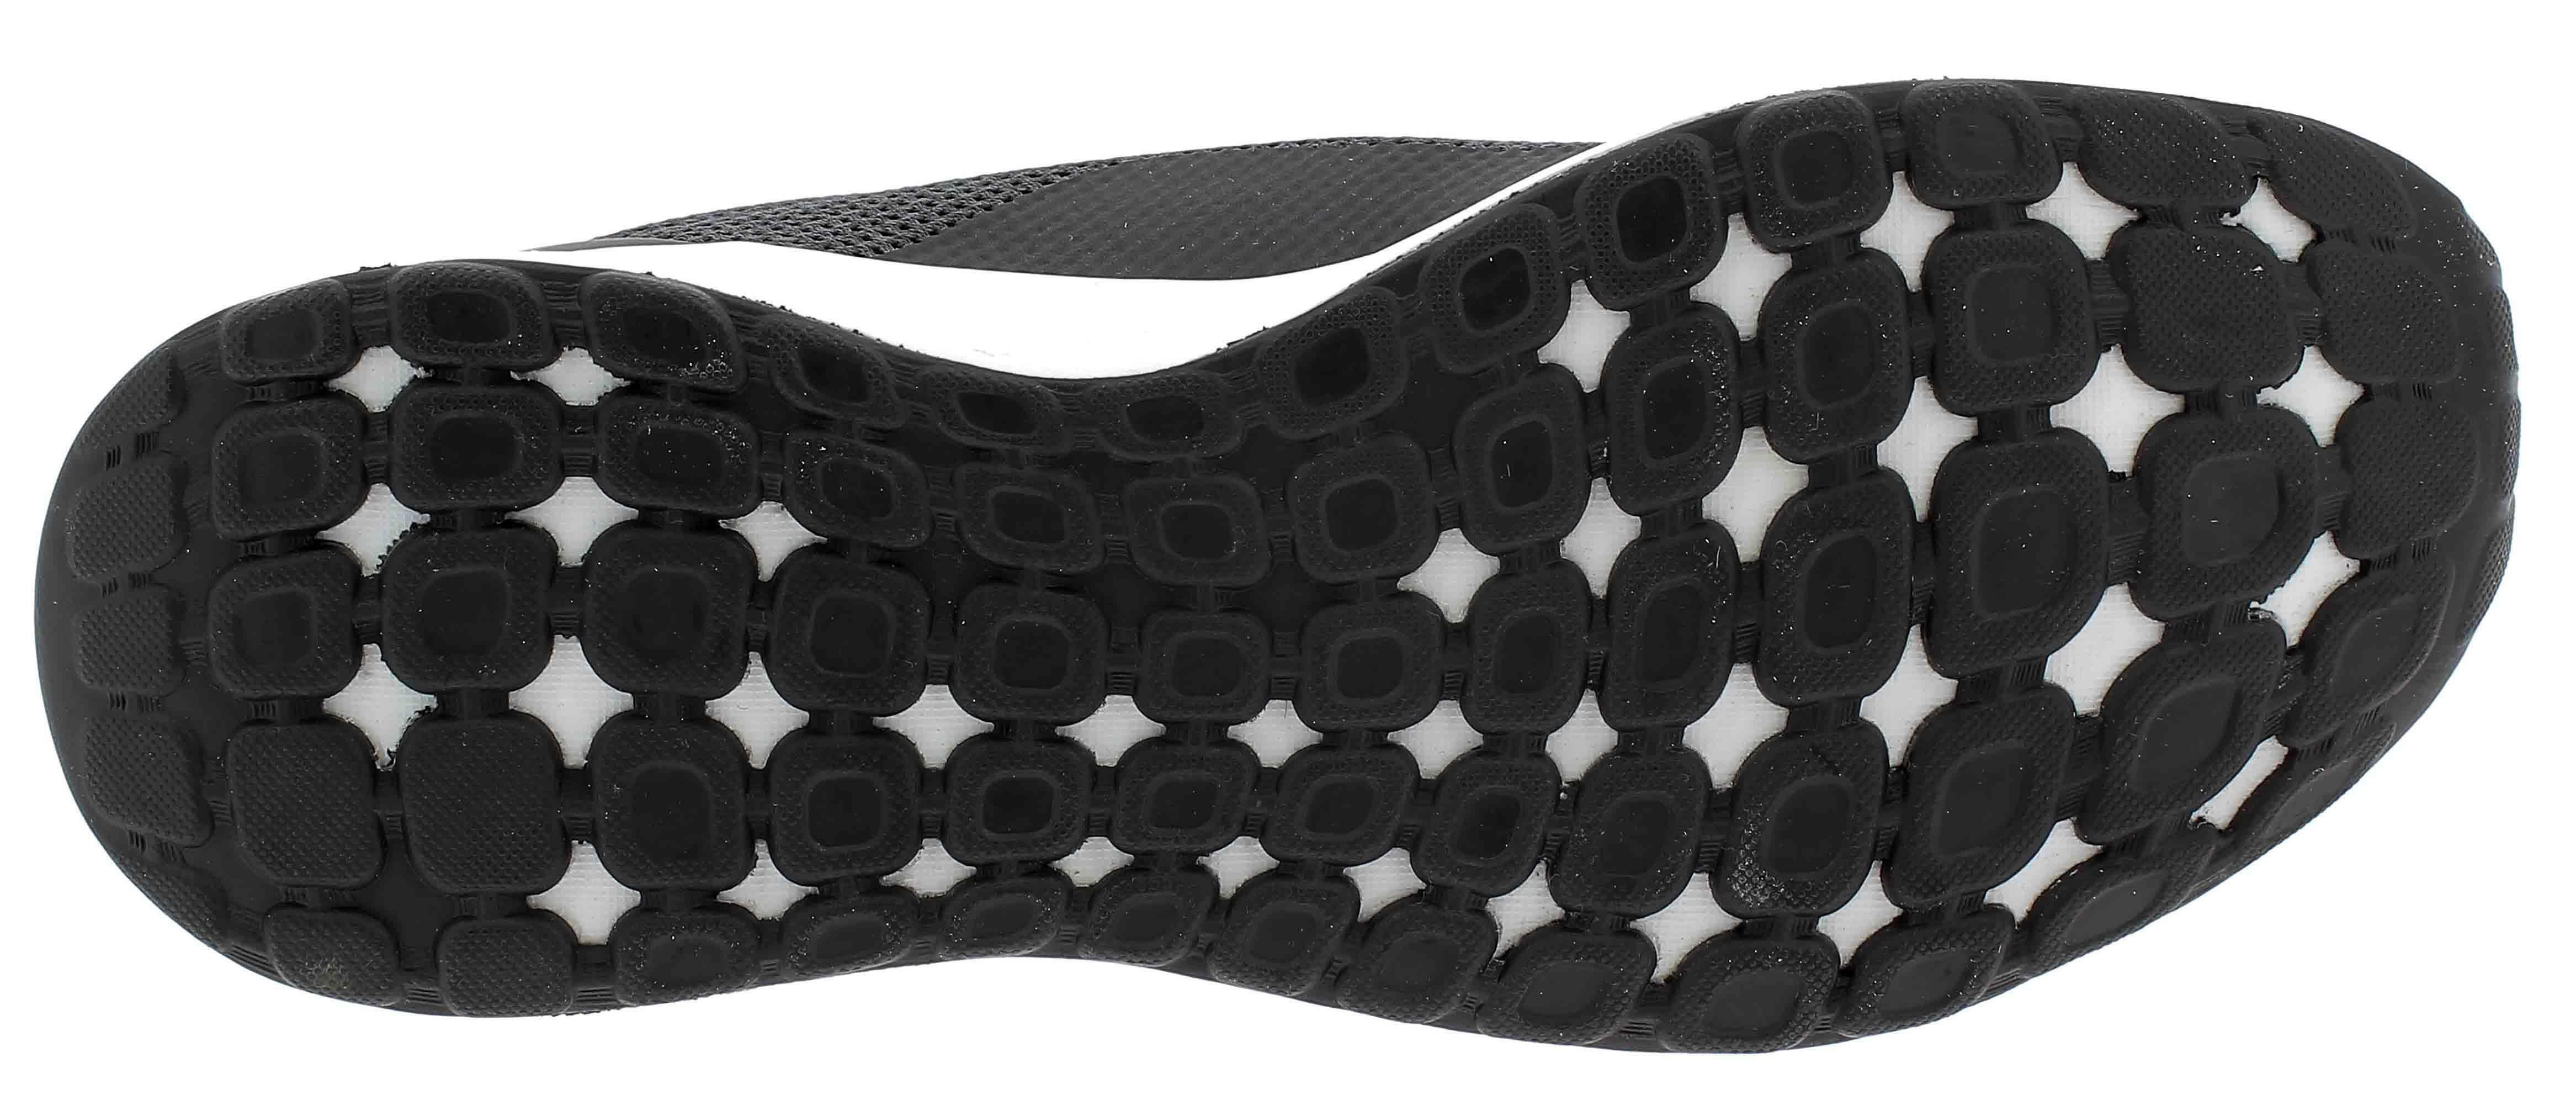 adidas adidas puremotion scarpe sportive donna nere b96551